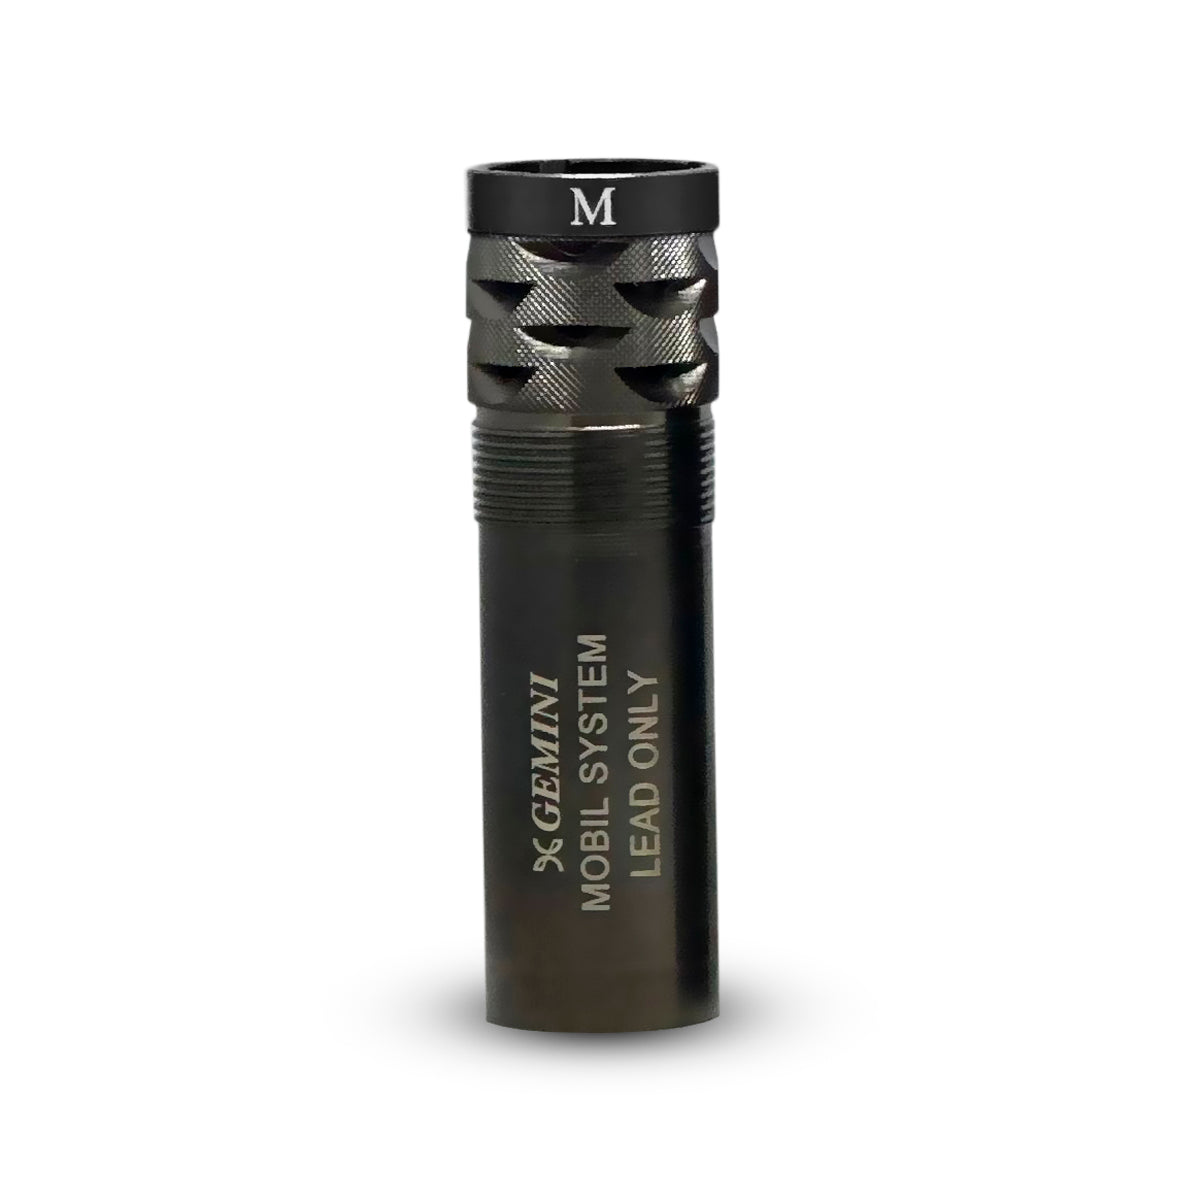 Choke Gemini Freno en boca +20mm Mobilchoque (51mm) calibre 12 para escopetas de caza y tiro deportivo